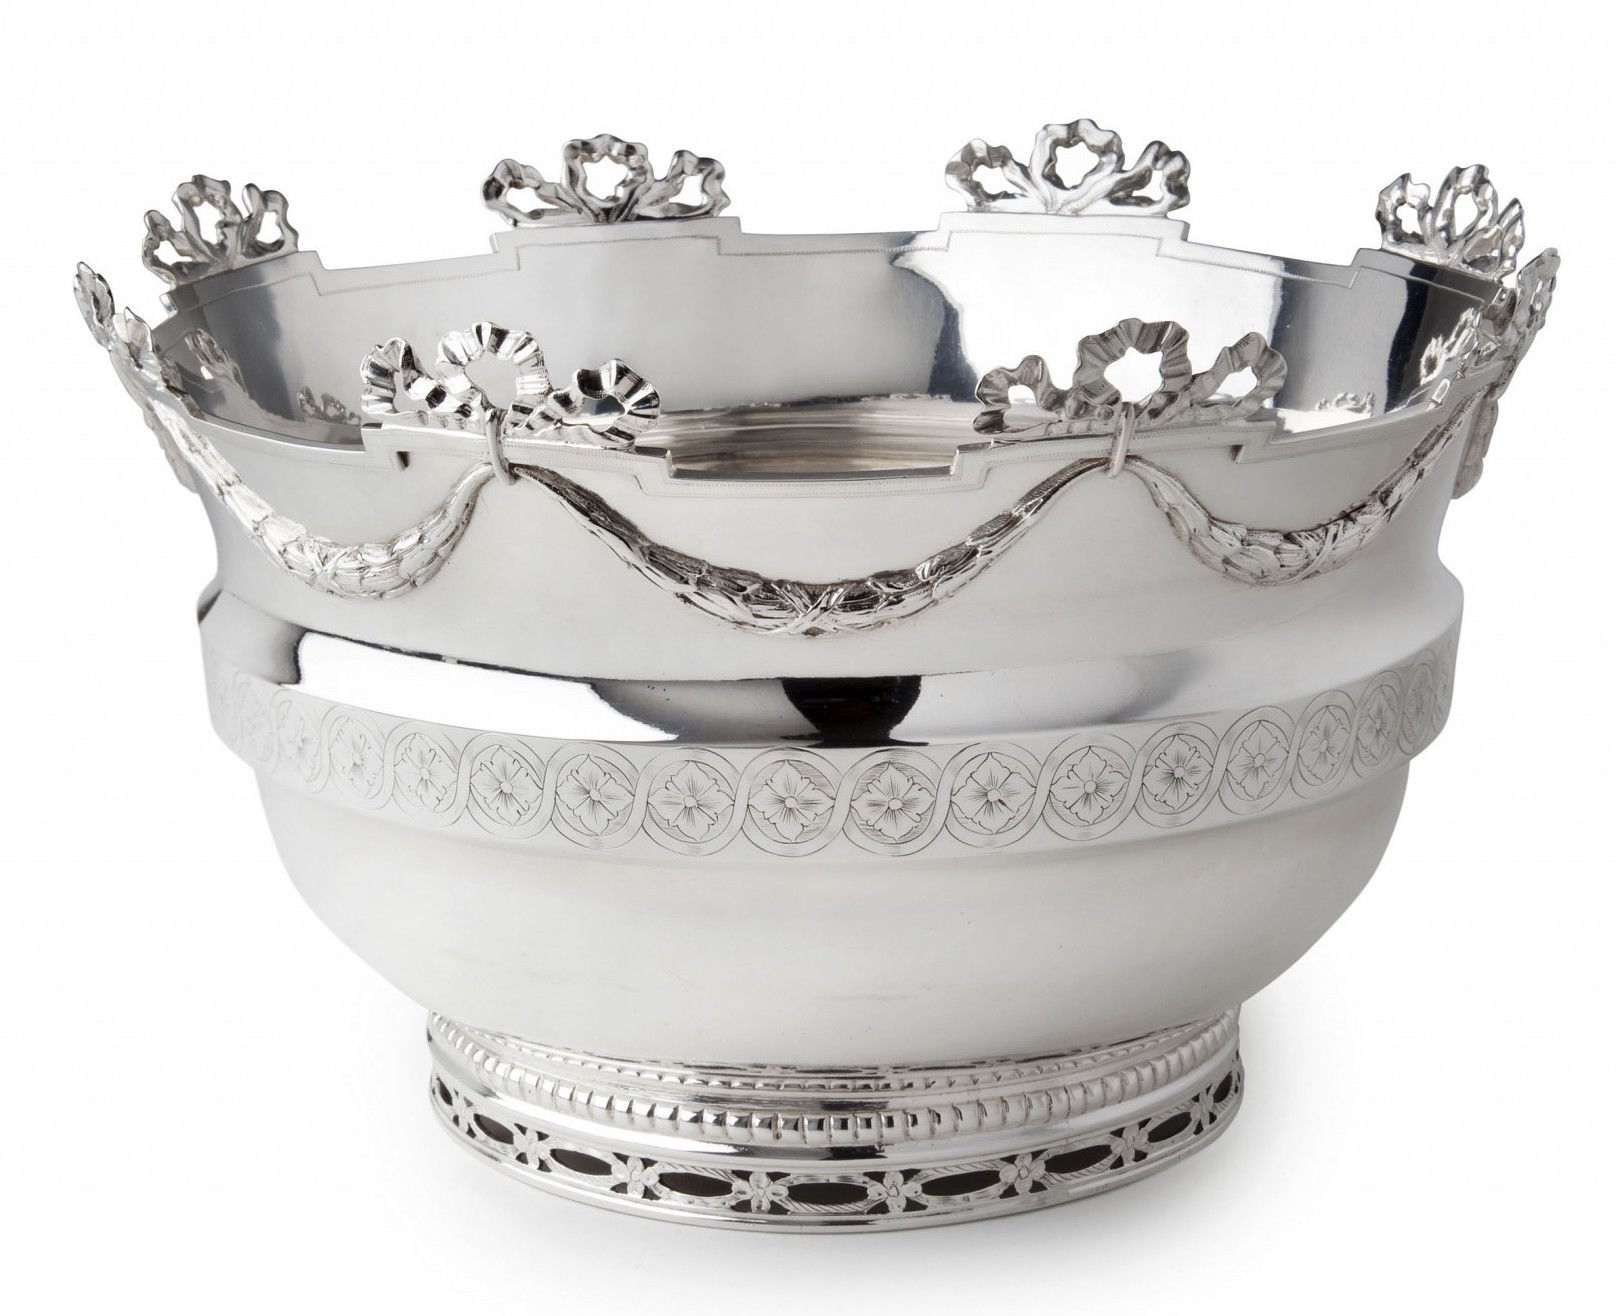 Reynier de Haan (1731-1783), elegant Louis XVI Dutch silver monteith bowl, 1778. Jacob J. Roosjen SRI.